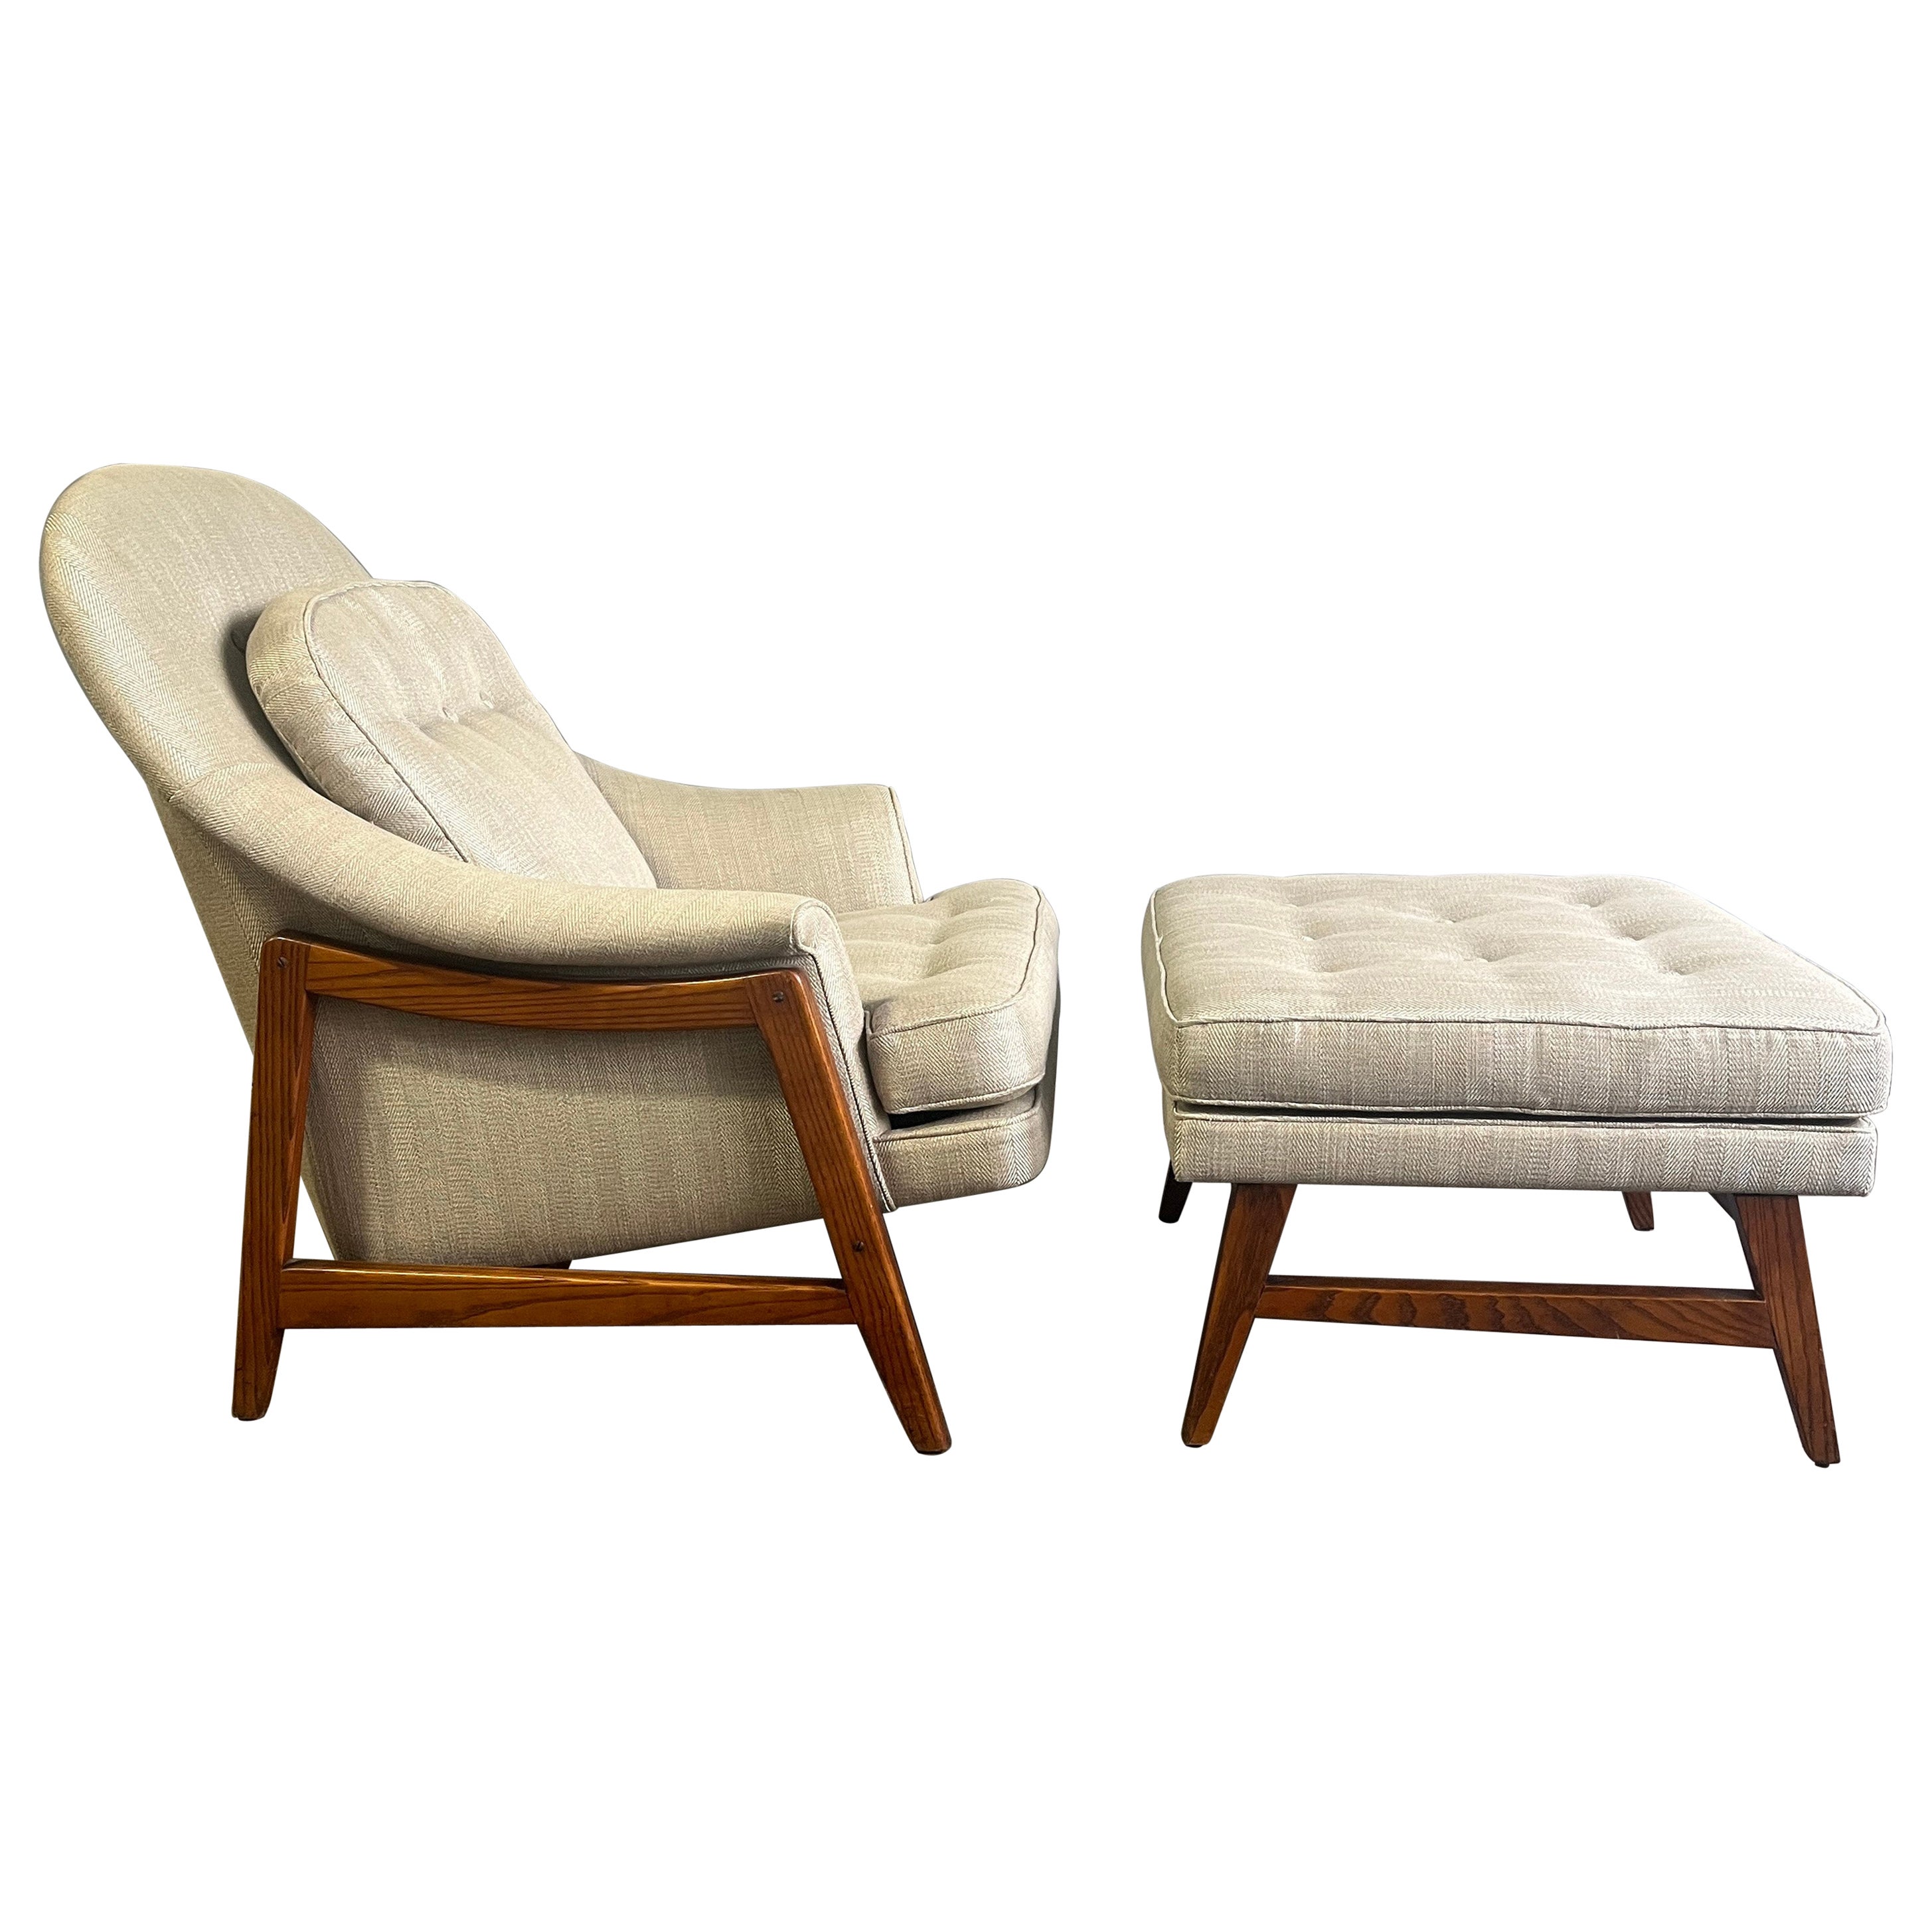 Edward Wormley Lounge Chair for Dunbar 